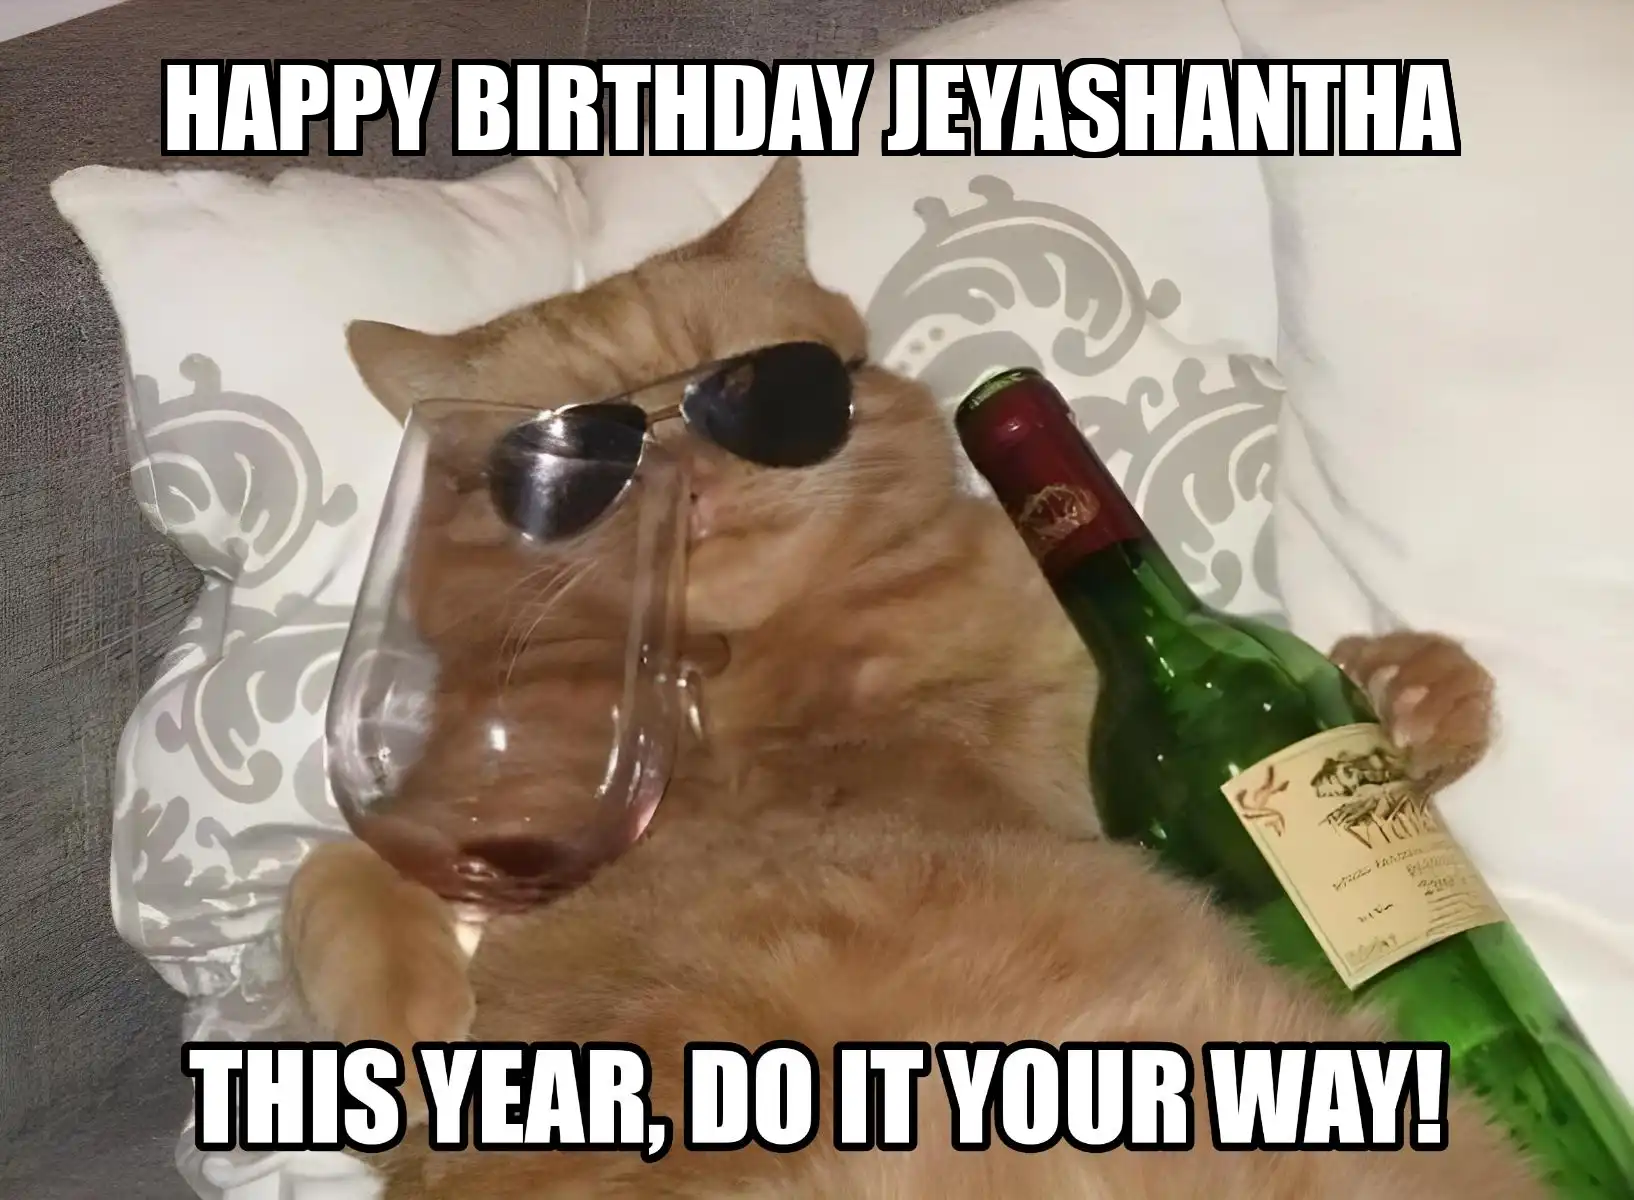 Happy Birthday Jeyashantha This Year Do It Your Way Meme